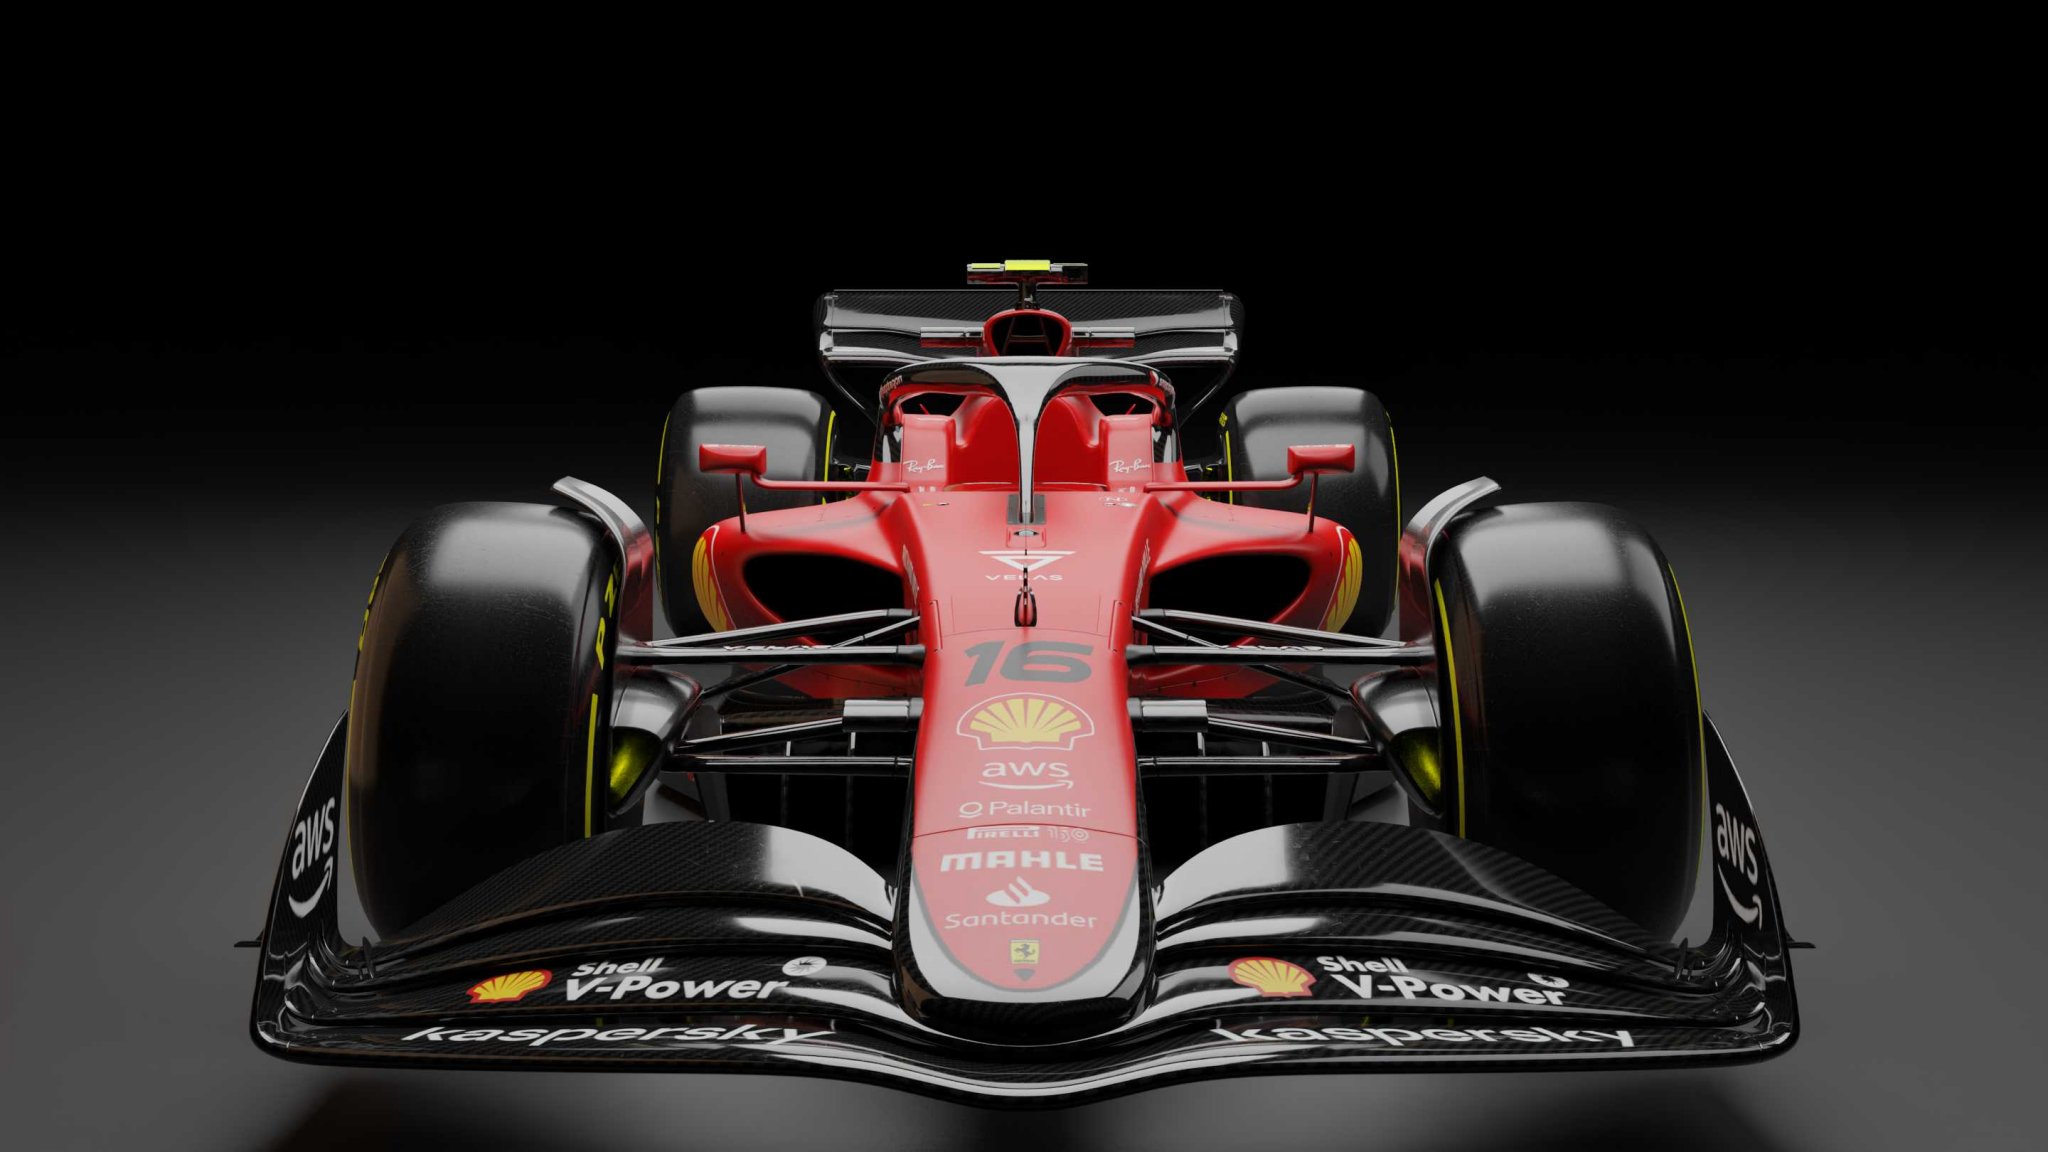 This Ferrari F1 75 wallpaper is a work of art 2048x1152